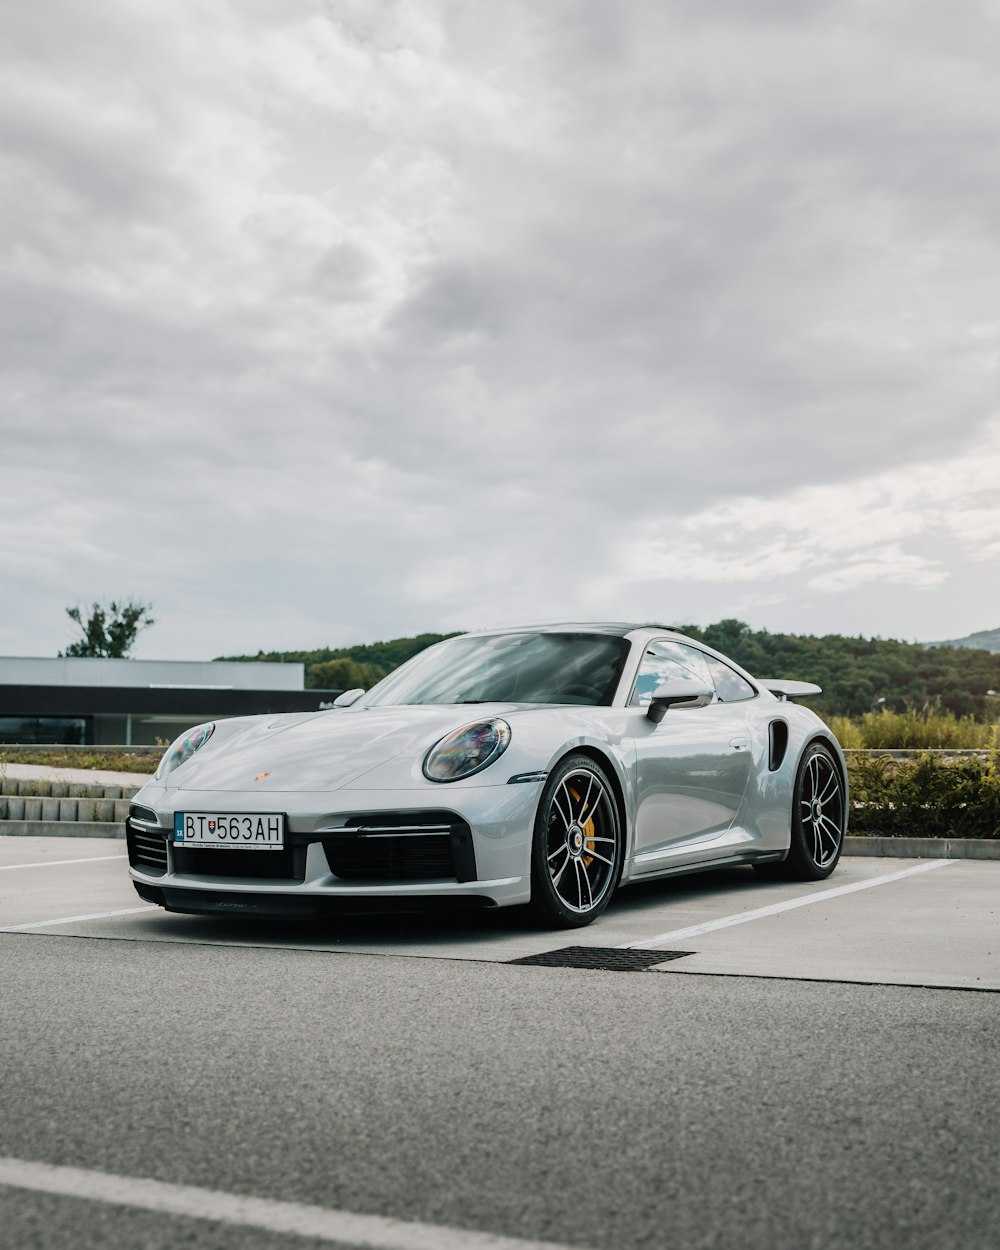 Porsche 911 Pictures | Download Free Images on Unsplash